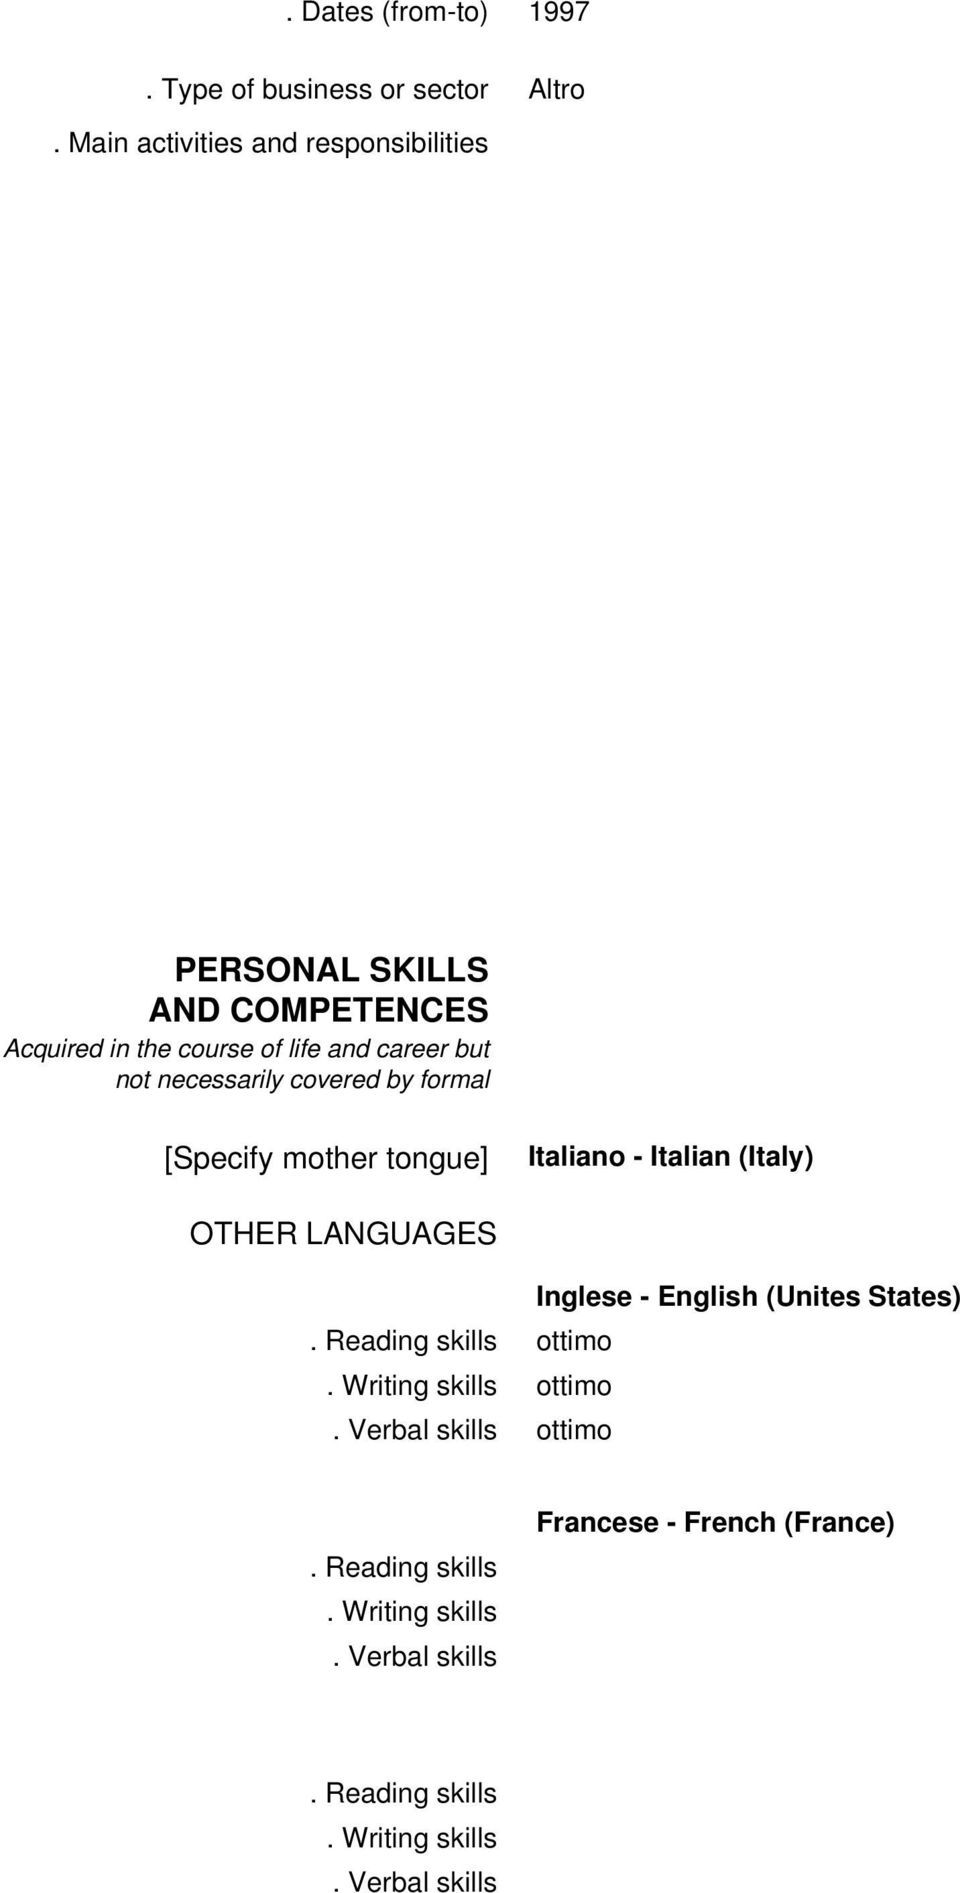 Writing skills. Verbal skills Inglese - English (Unites States) ottimo ottimo ottimo. Reading skills.